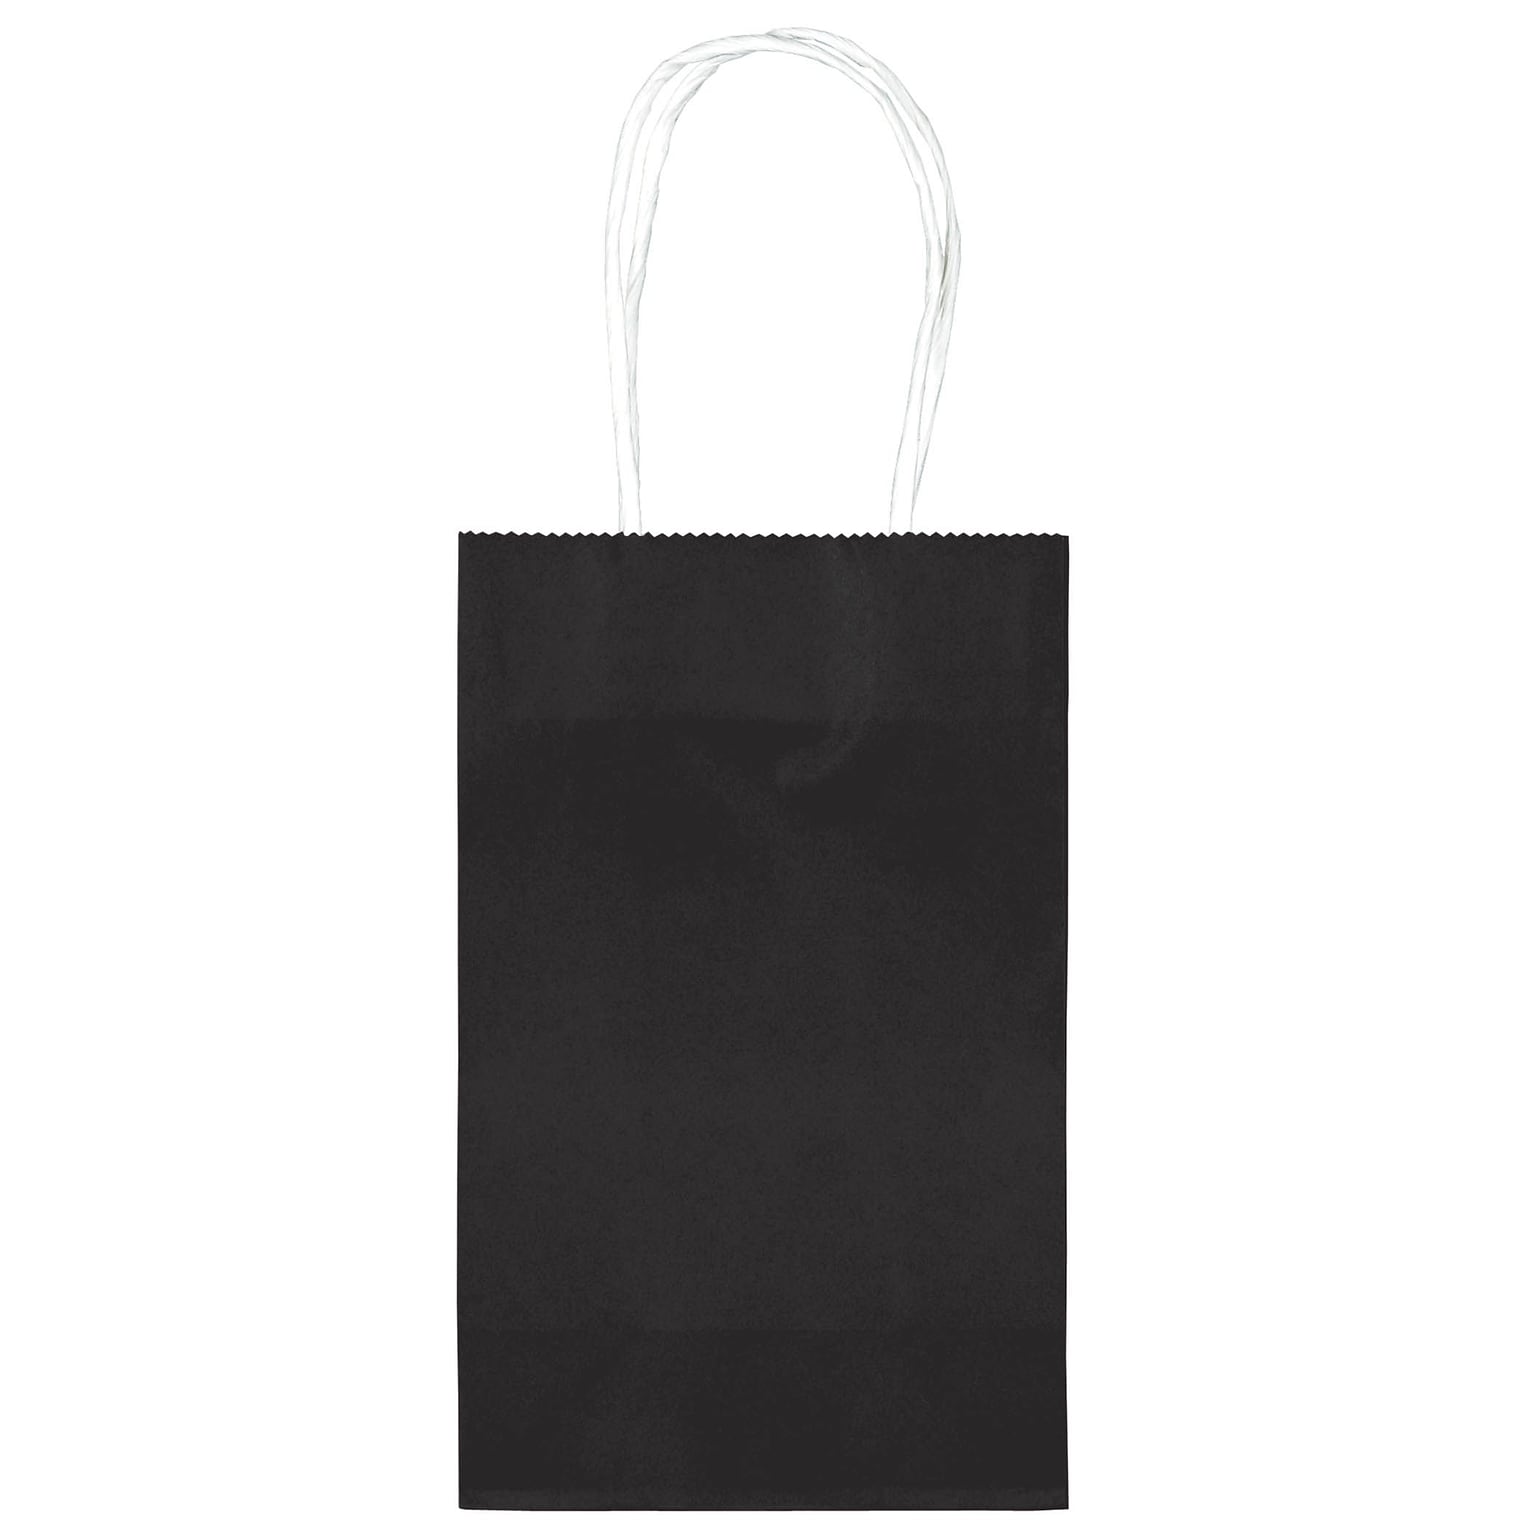 Amscan Cub Bags Value Pack, Black, 4/Pack (162500.1)